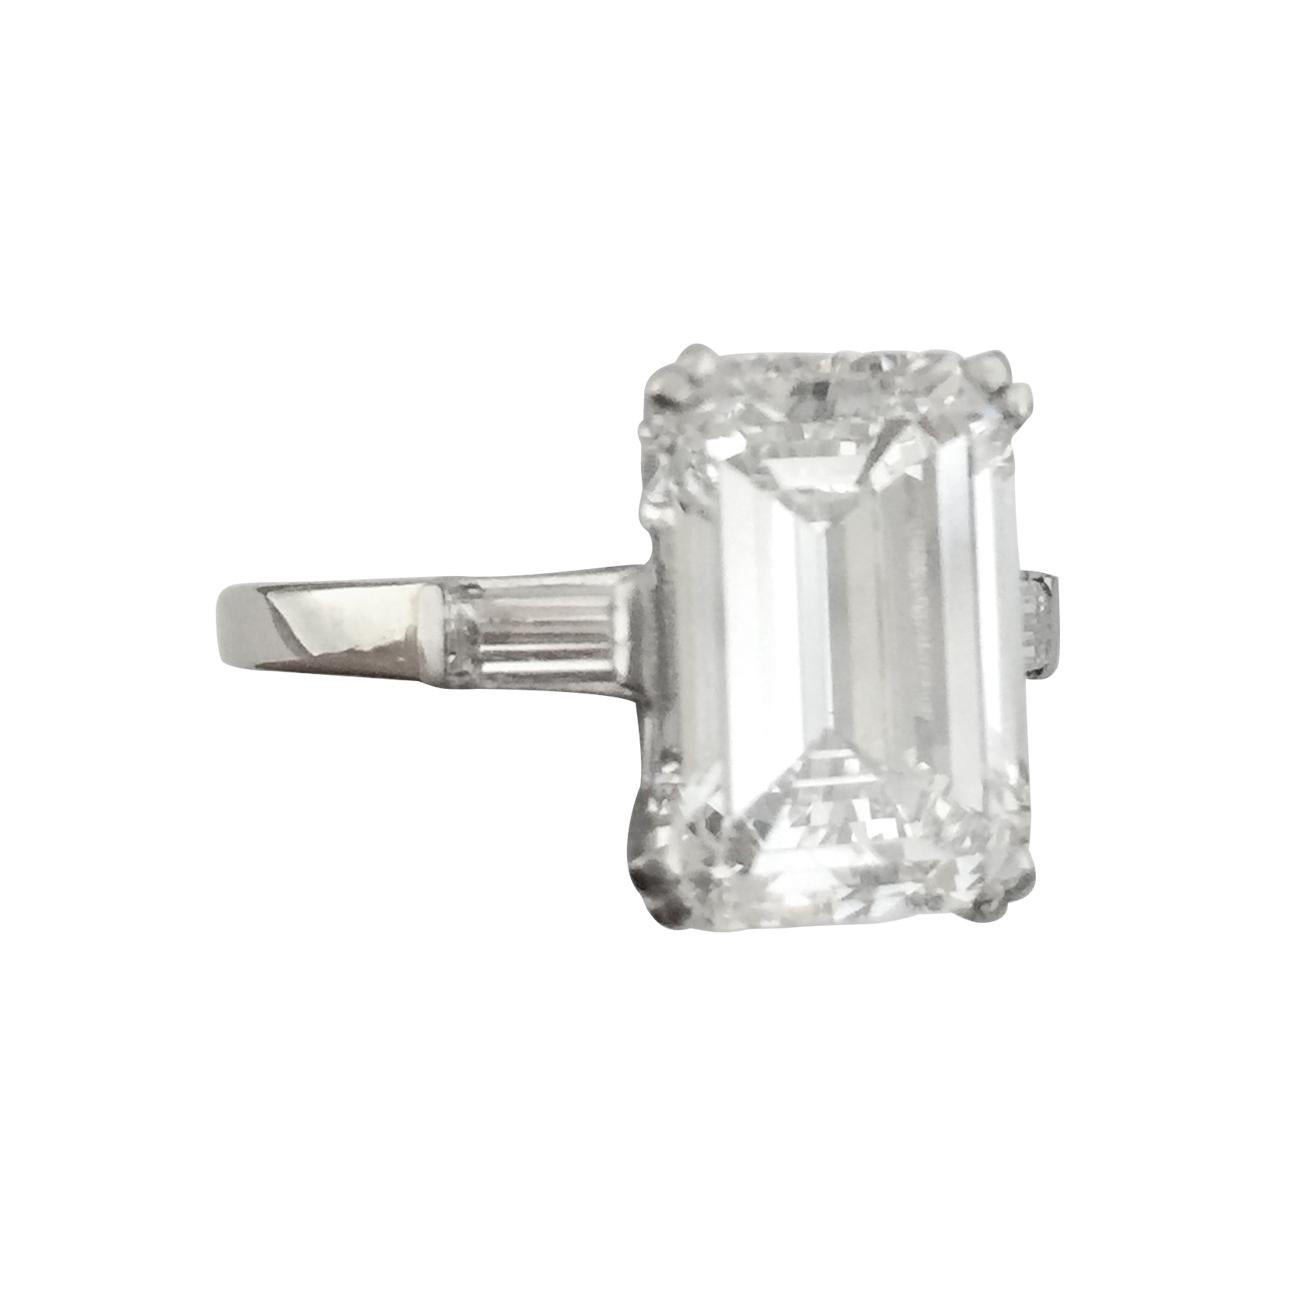 Emerald Cut Engagement ring set with 3.82 Carat Emerald-Cut Diamond